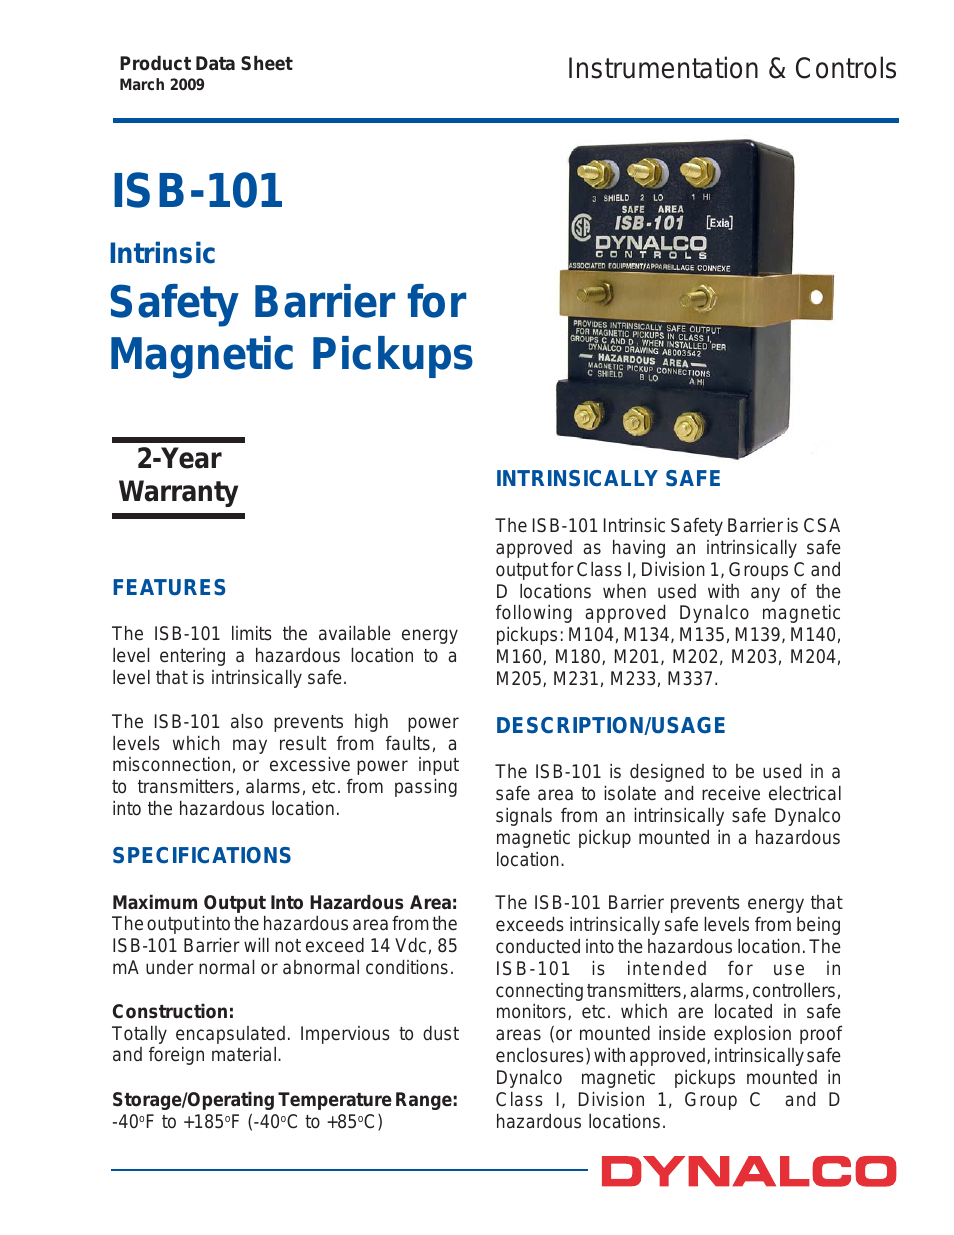 ISB-101 Magnetic Pickup/Speed Sensor